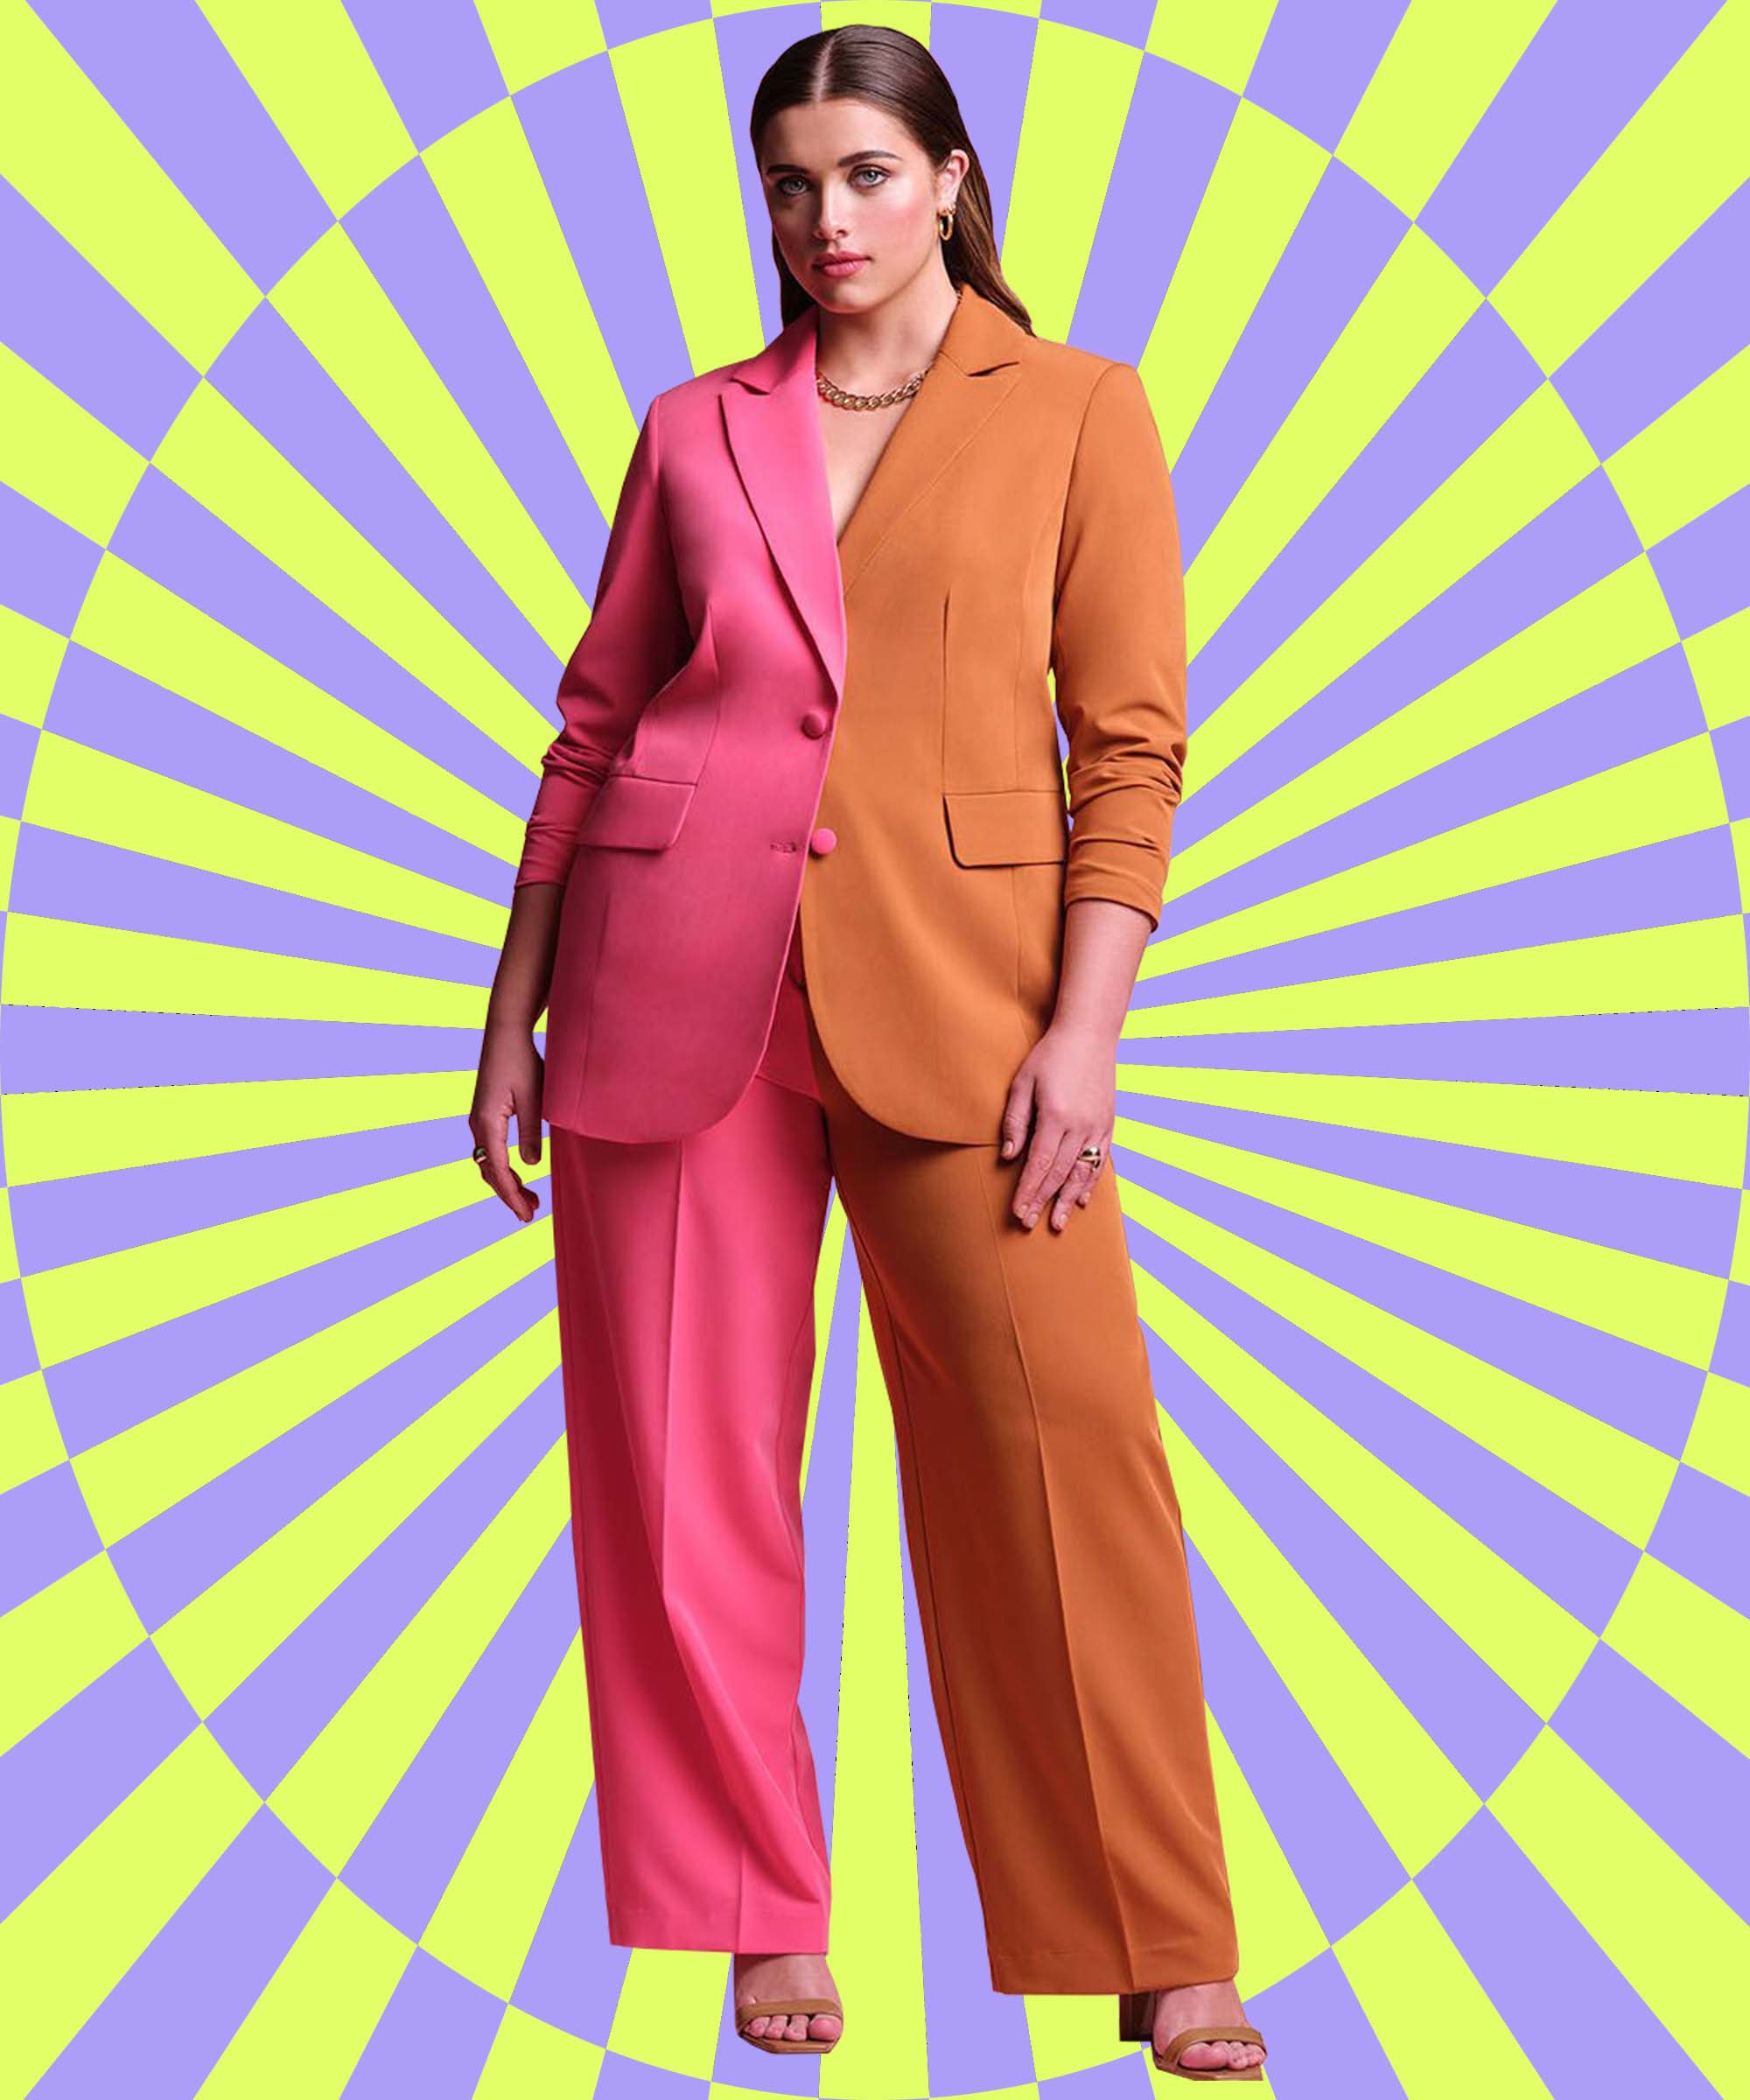 Women's Burnt Orange Suit | Suits for Work, Weddings & More-nextbuild.com.vn